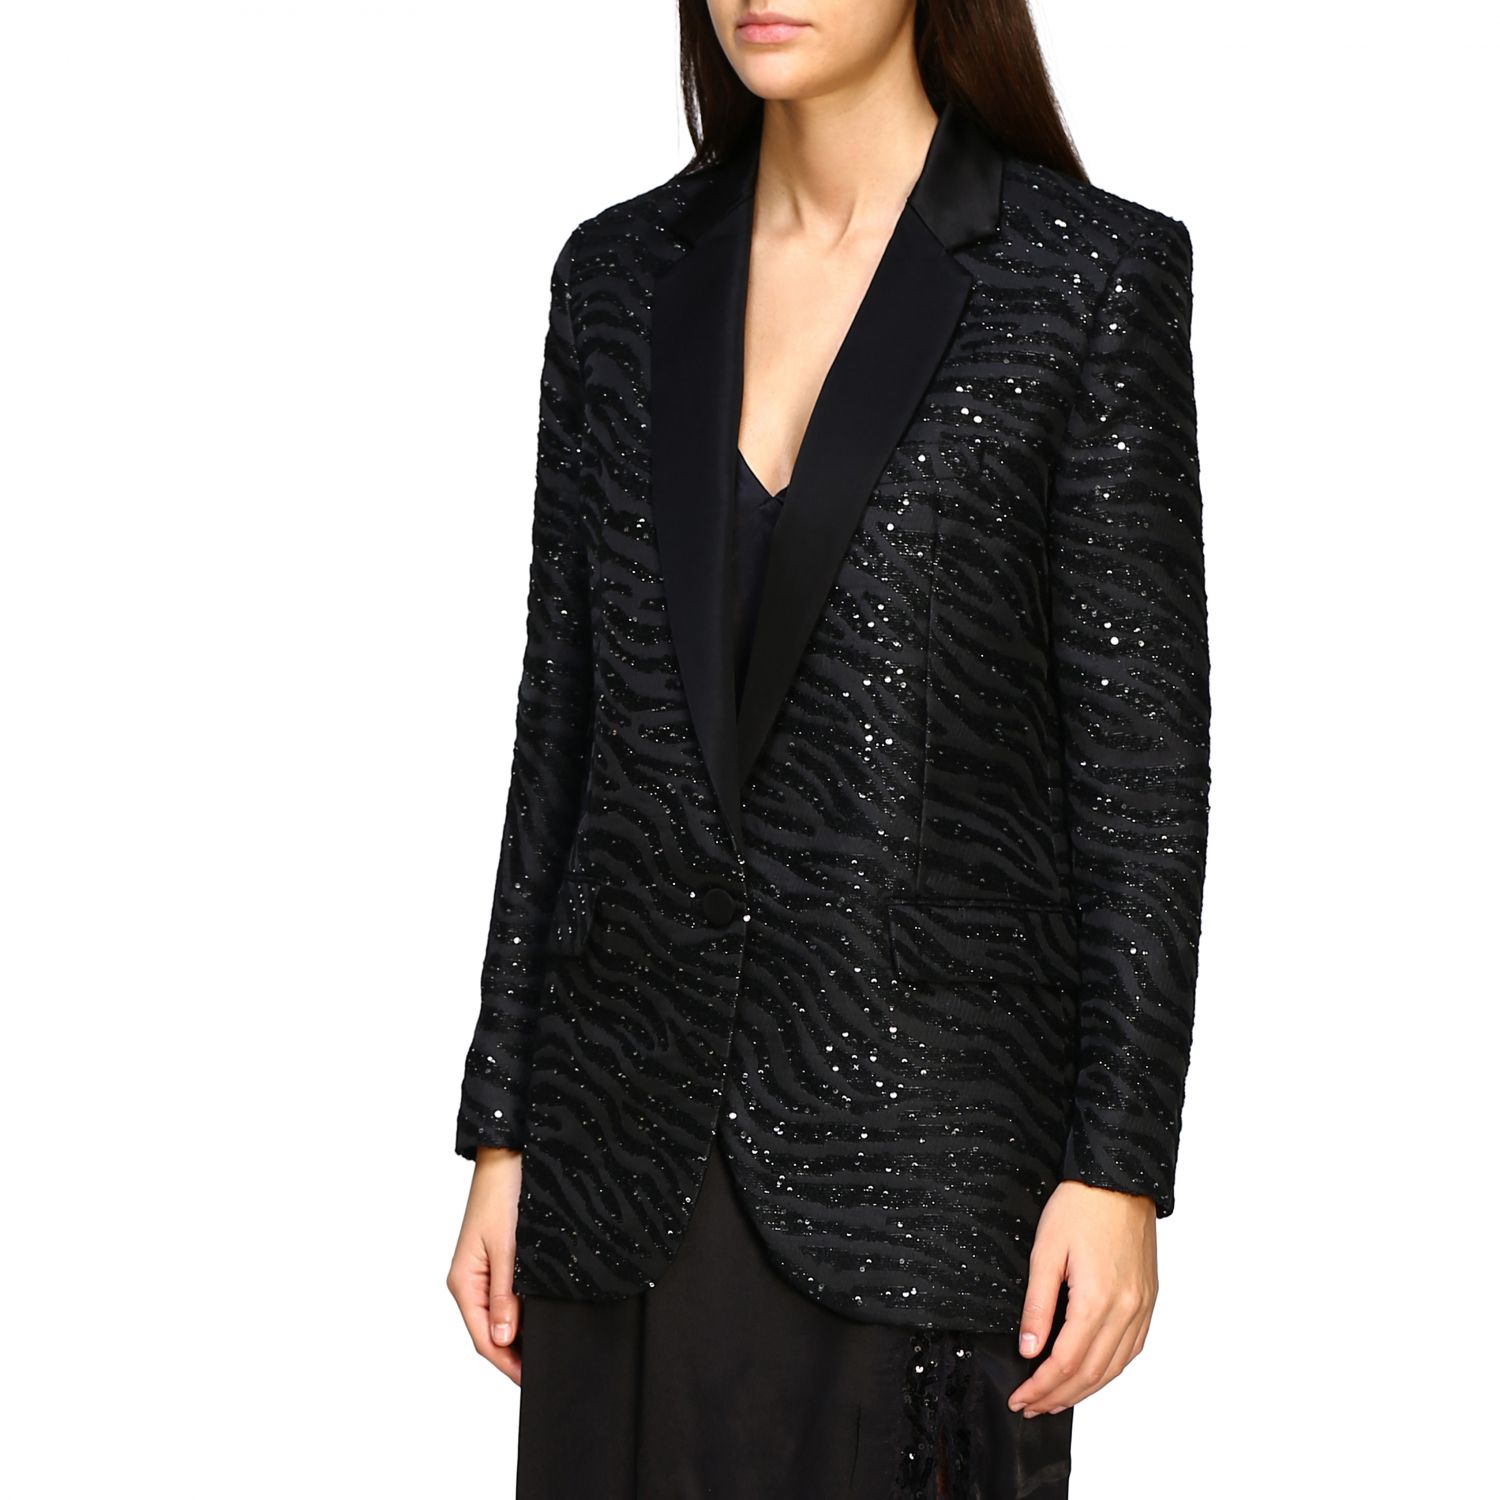 Michael Kors Outlet: jacket for women - Black | Michael Kors jacket ...